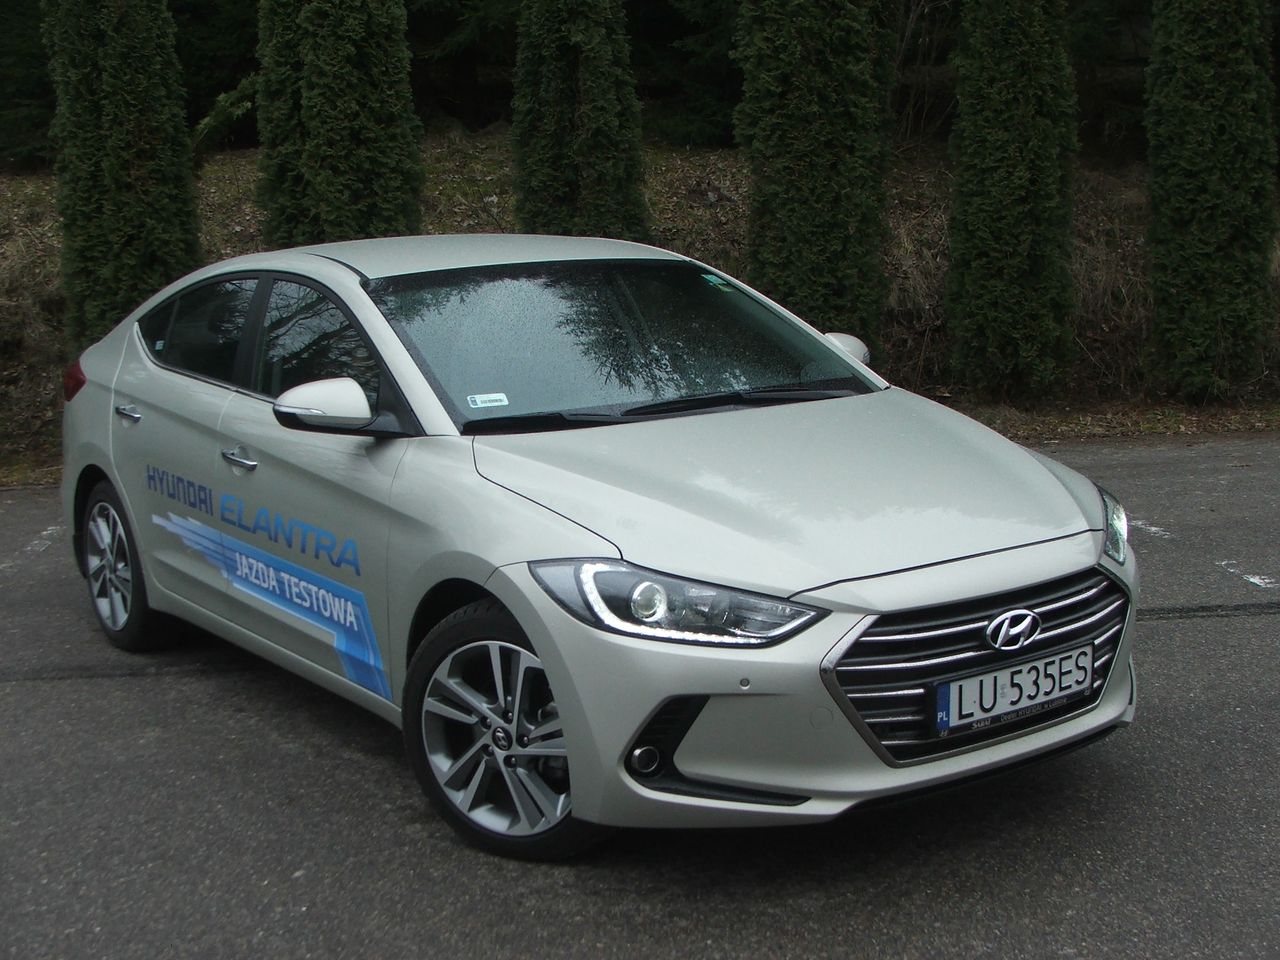 Maciek testuje - Hyundai Elantra 1.6 CRDi Style